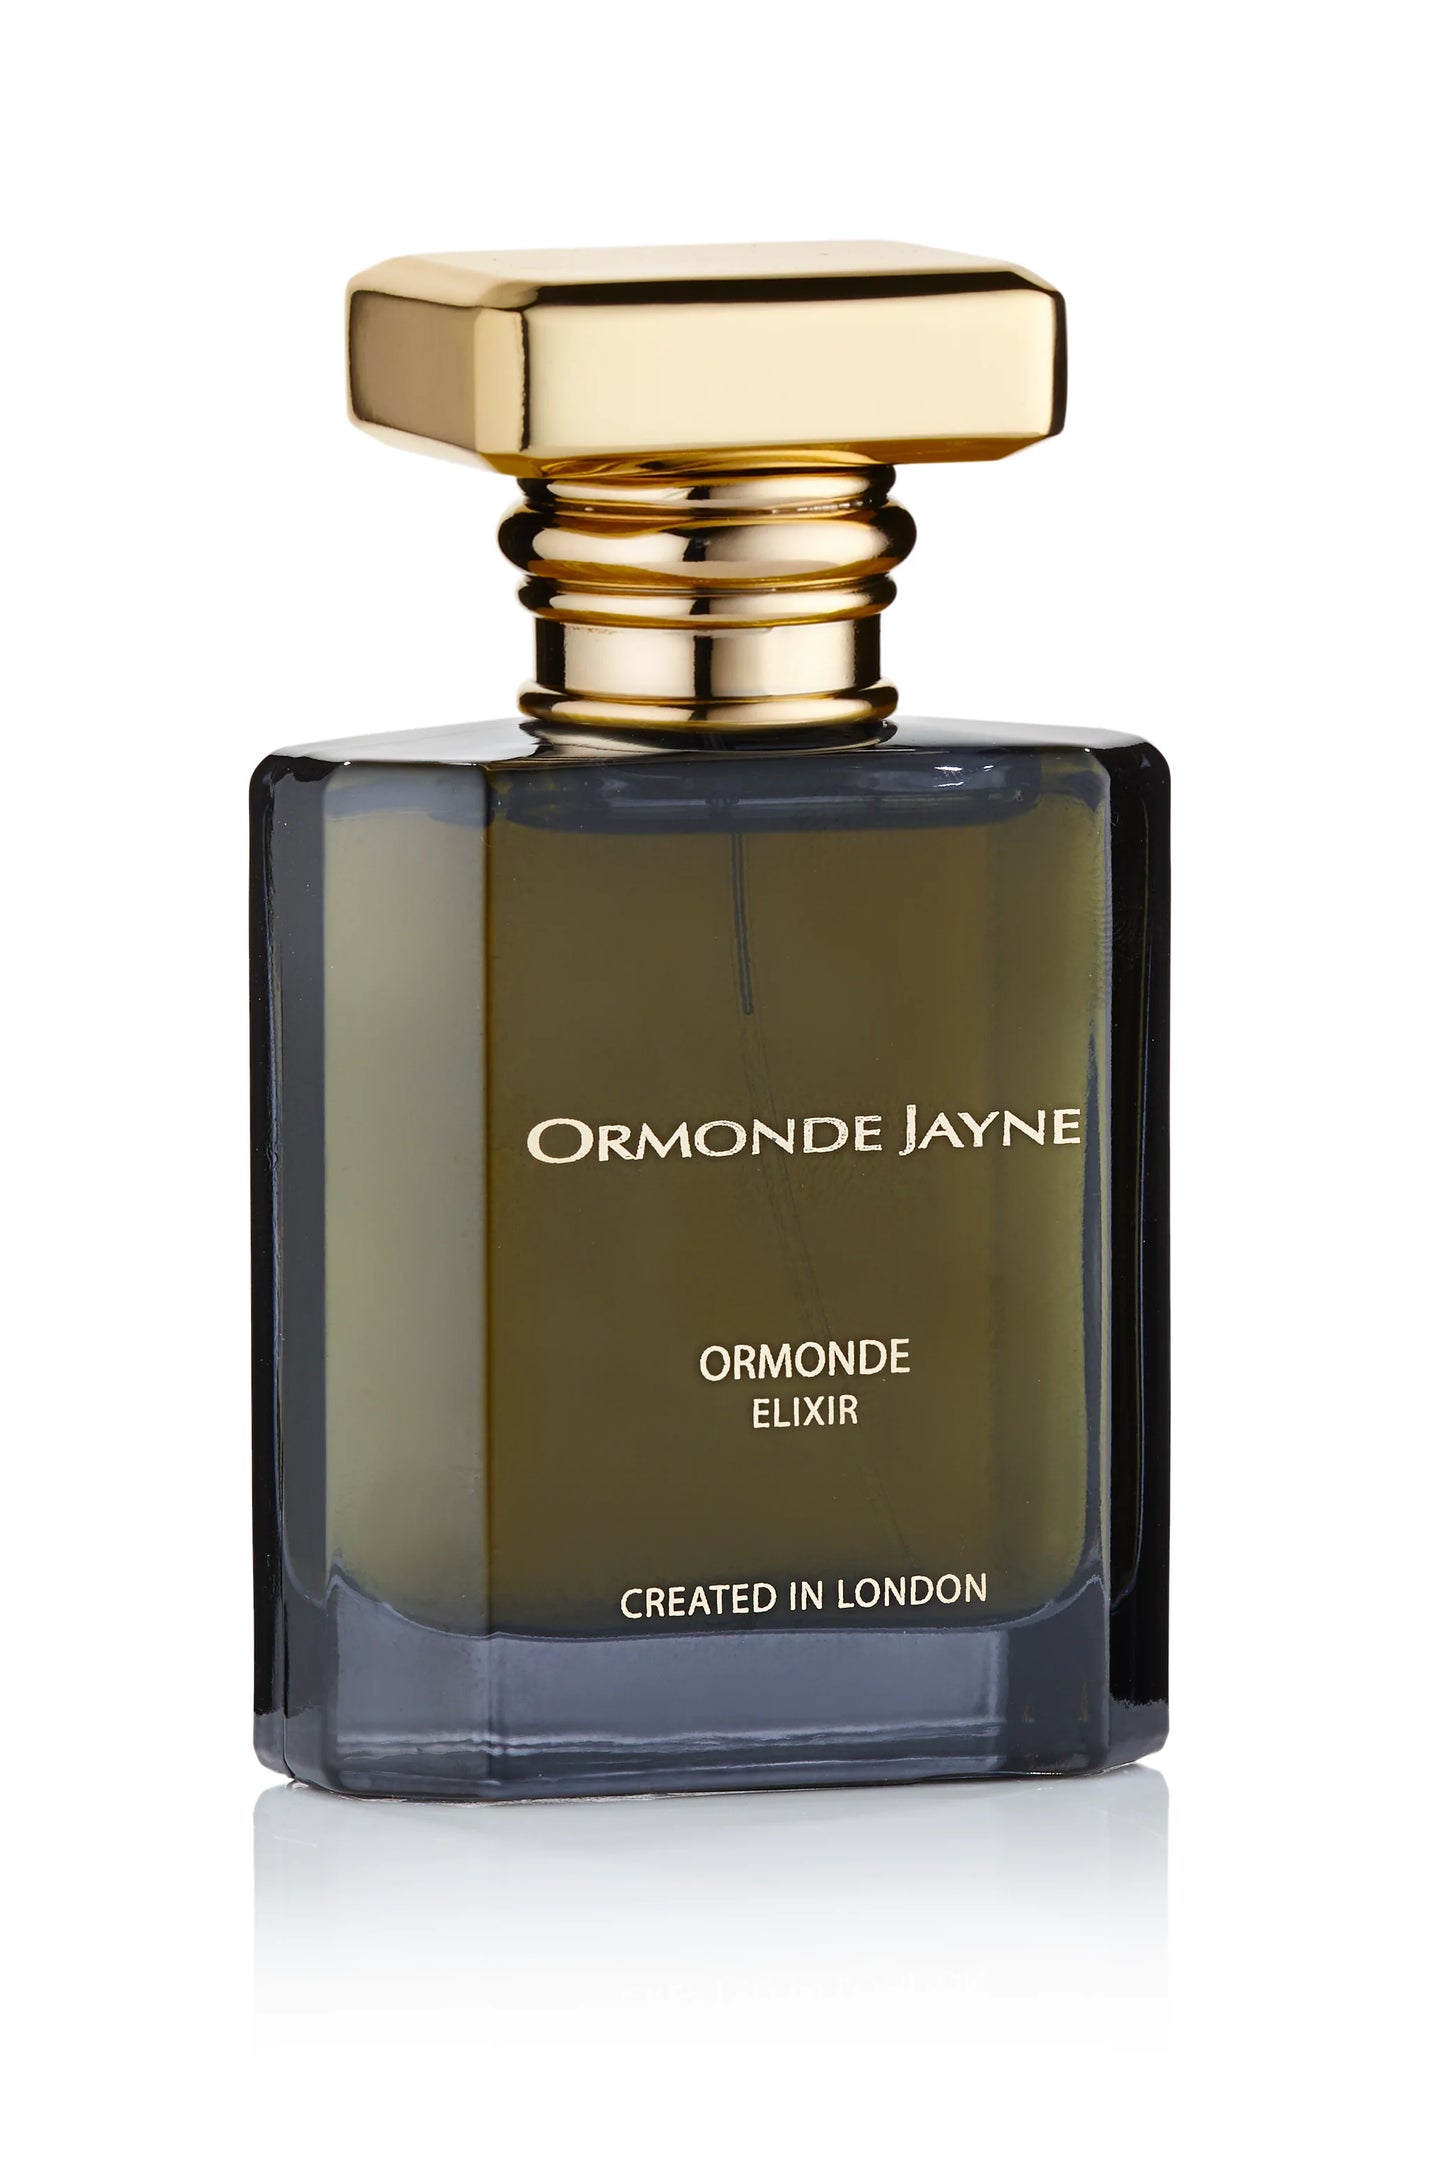 Ormonde Jayne Ormonde Elixir 2ml 0.06 φλ. επίσημο δείγμα αρώματος oz